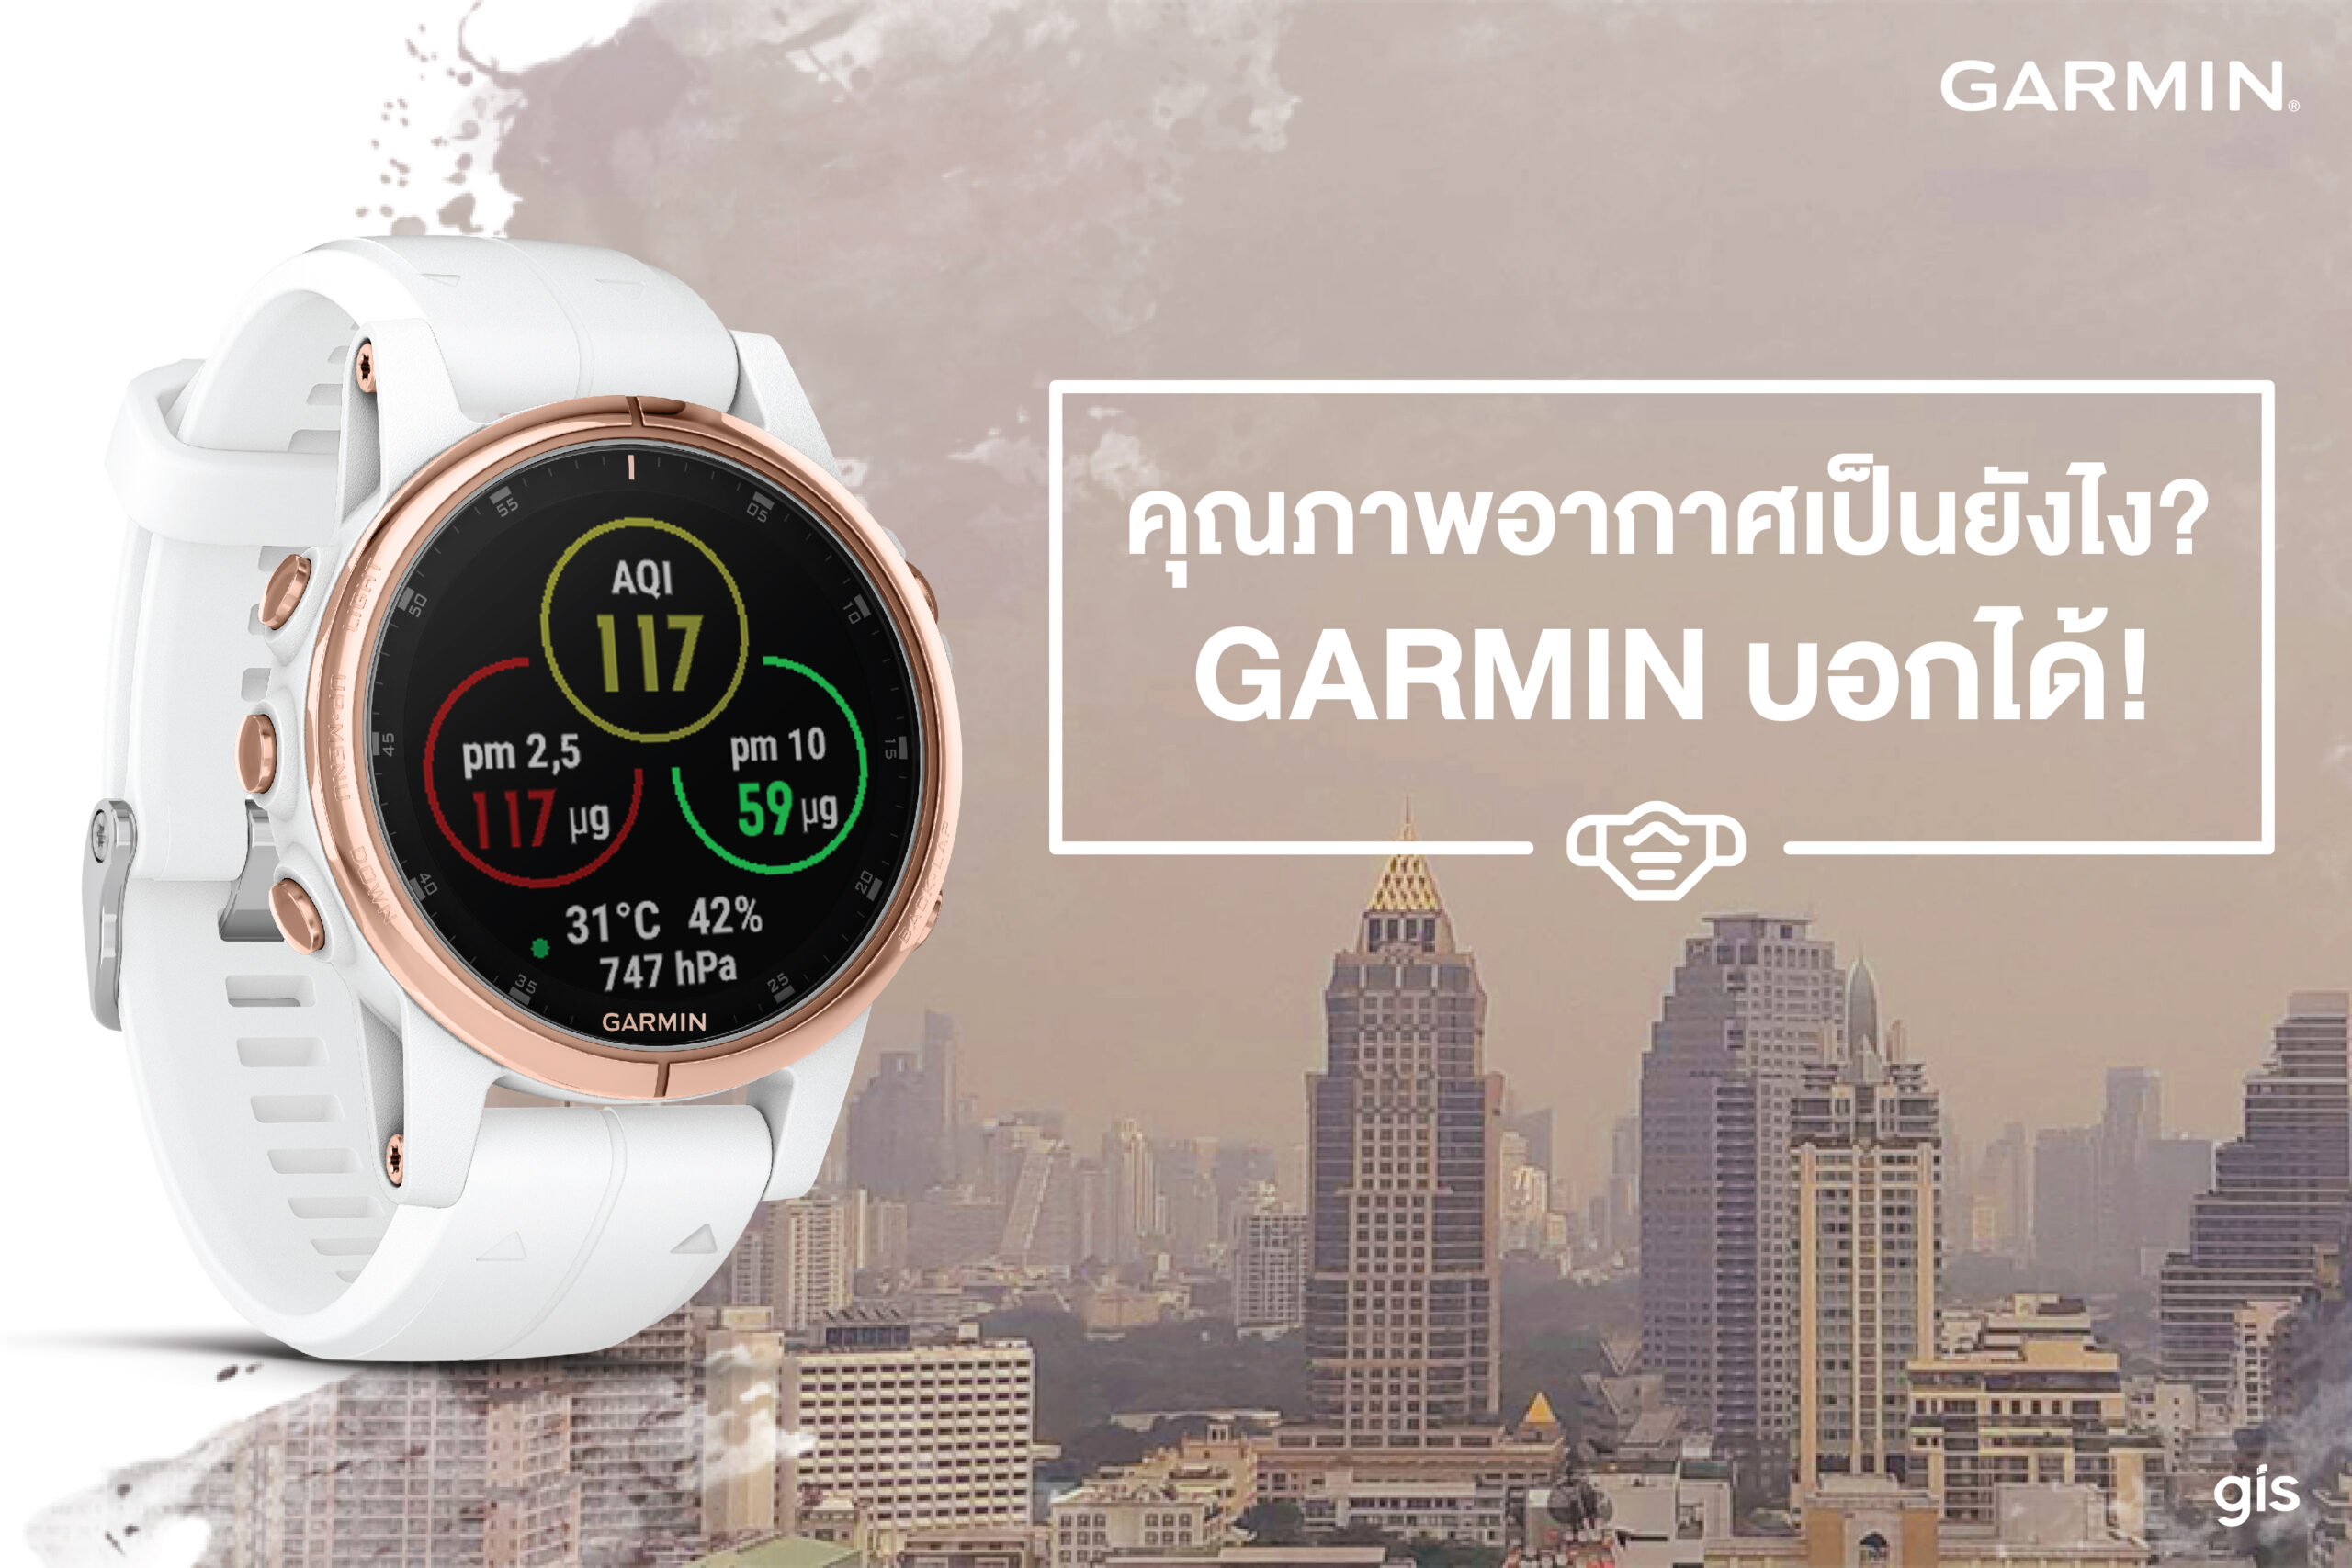 GARMIN แนะนำวิทเจ็ท “Airly” เช็คดัชนีคุณภาพอากาศ